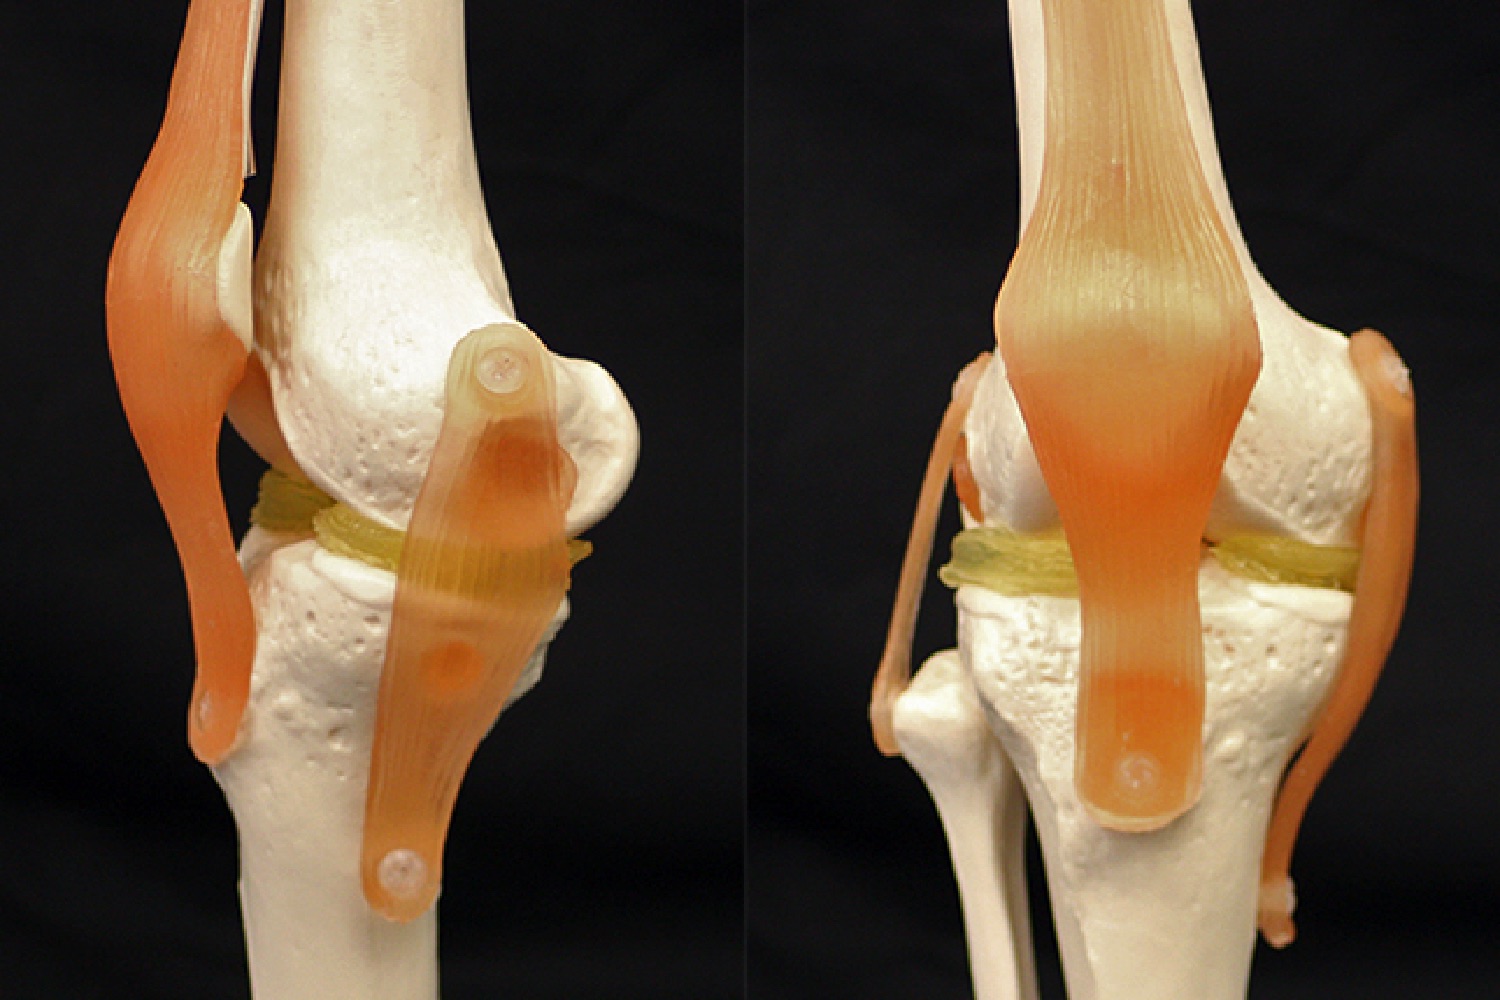 3d printed cartilage knee implant